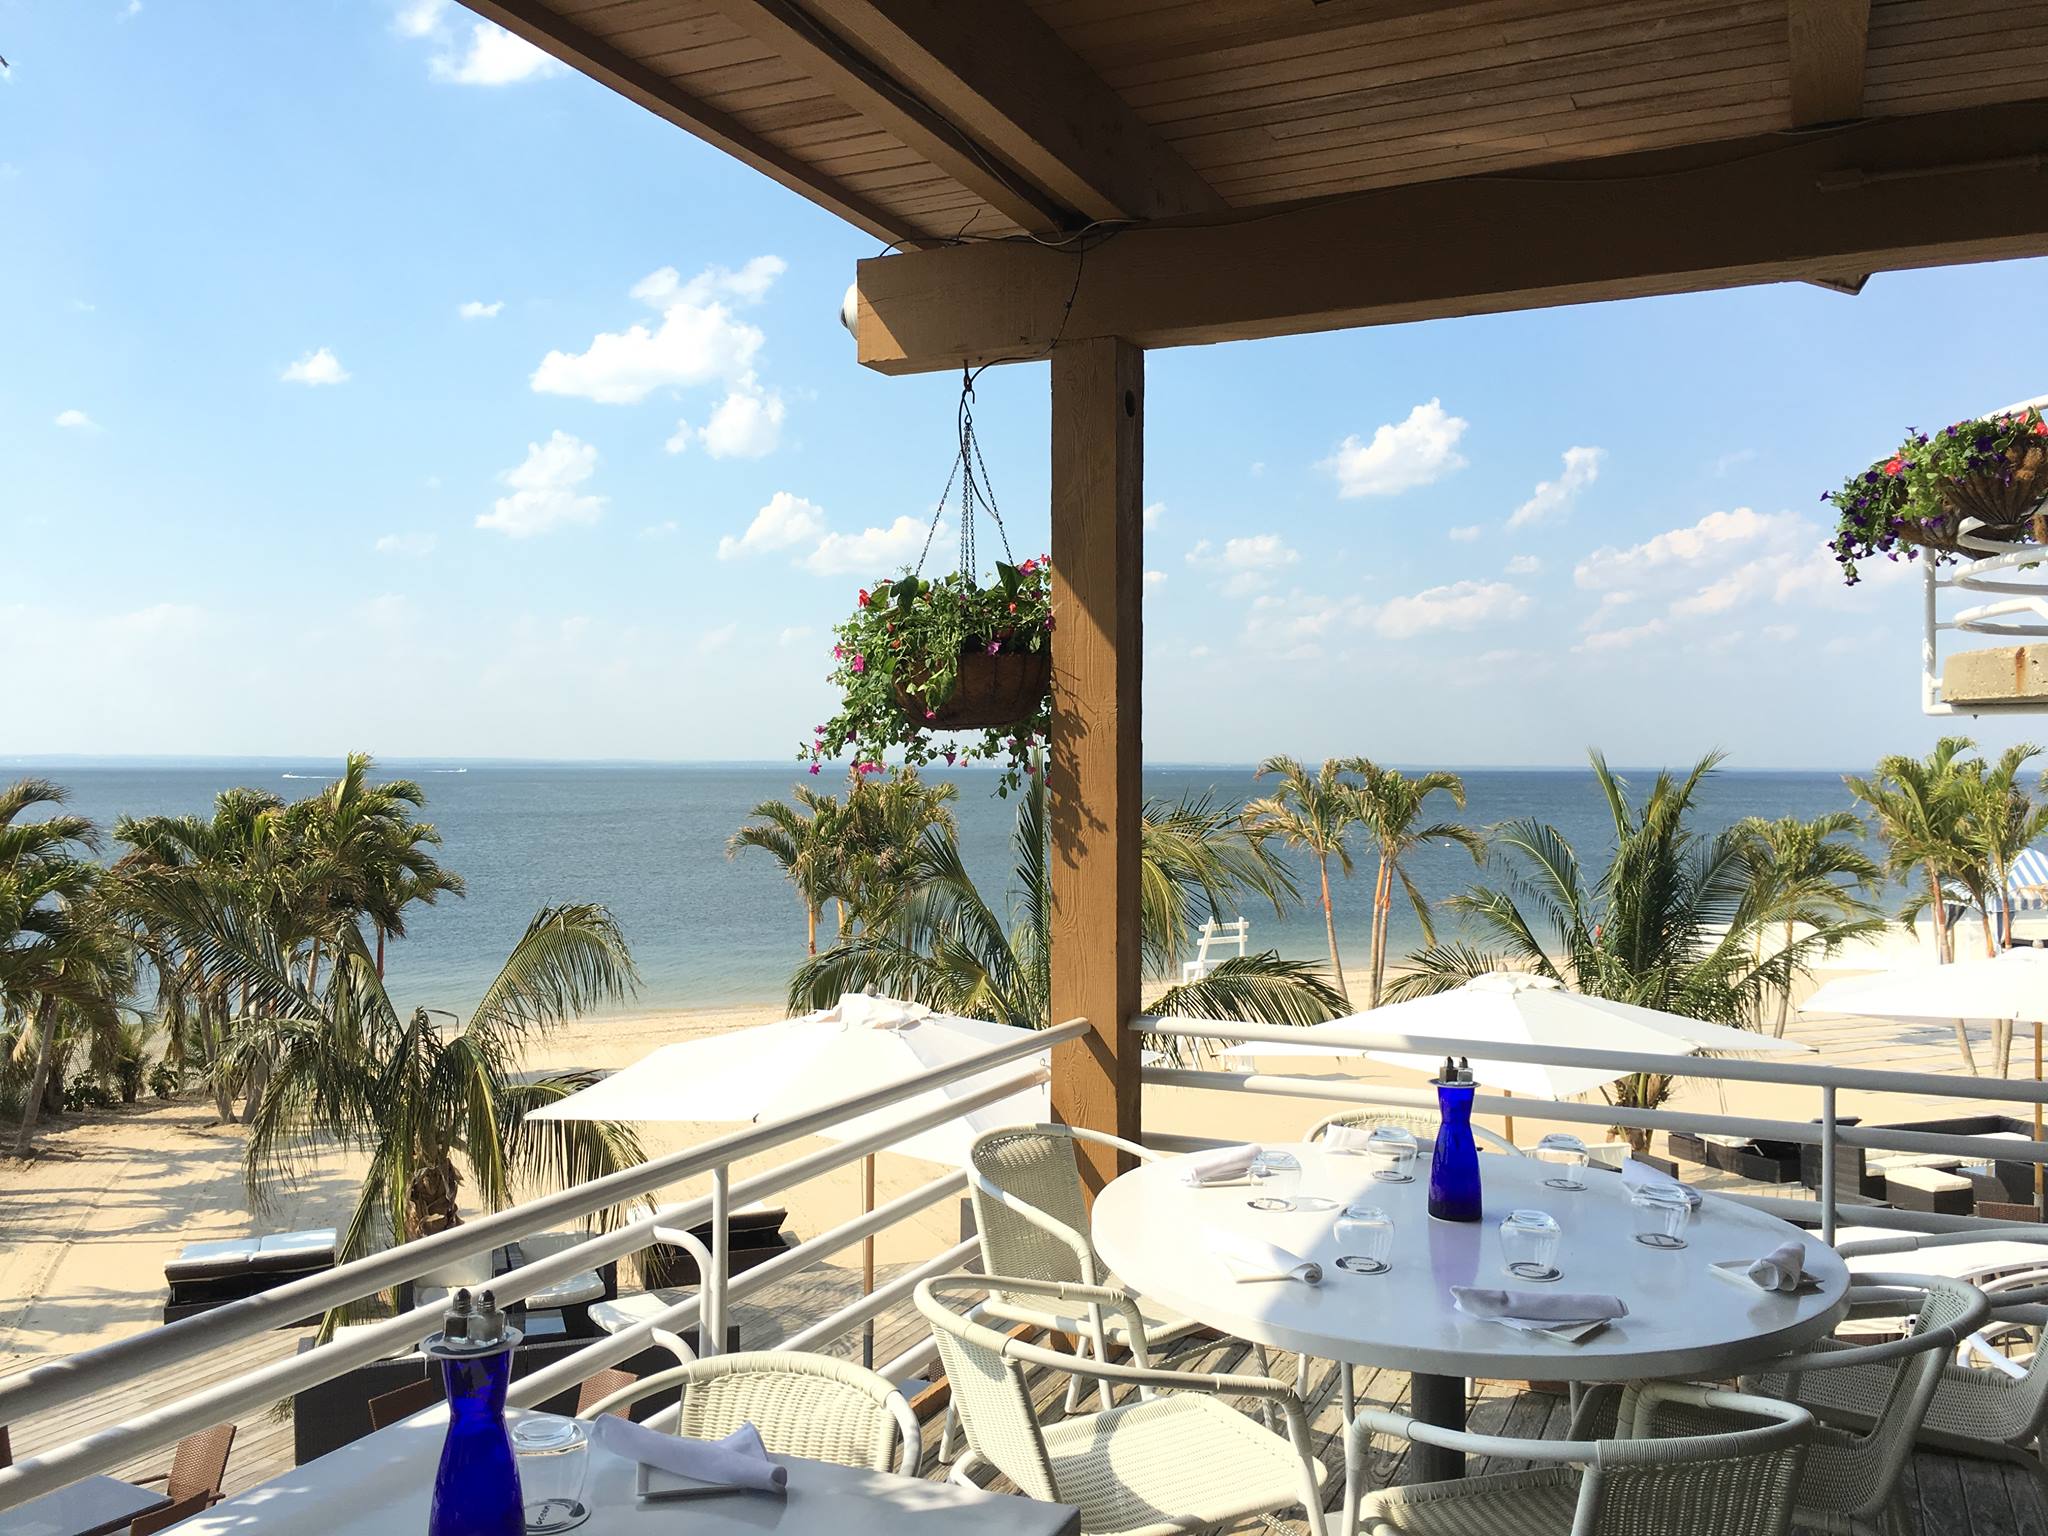 Best Waterfront Restaurants on Long Island The Thunderbird